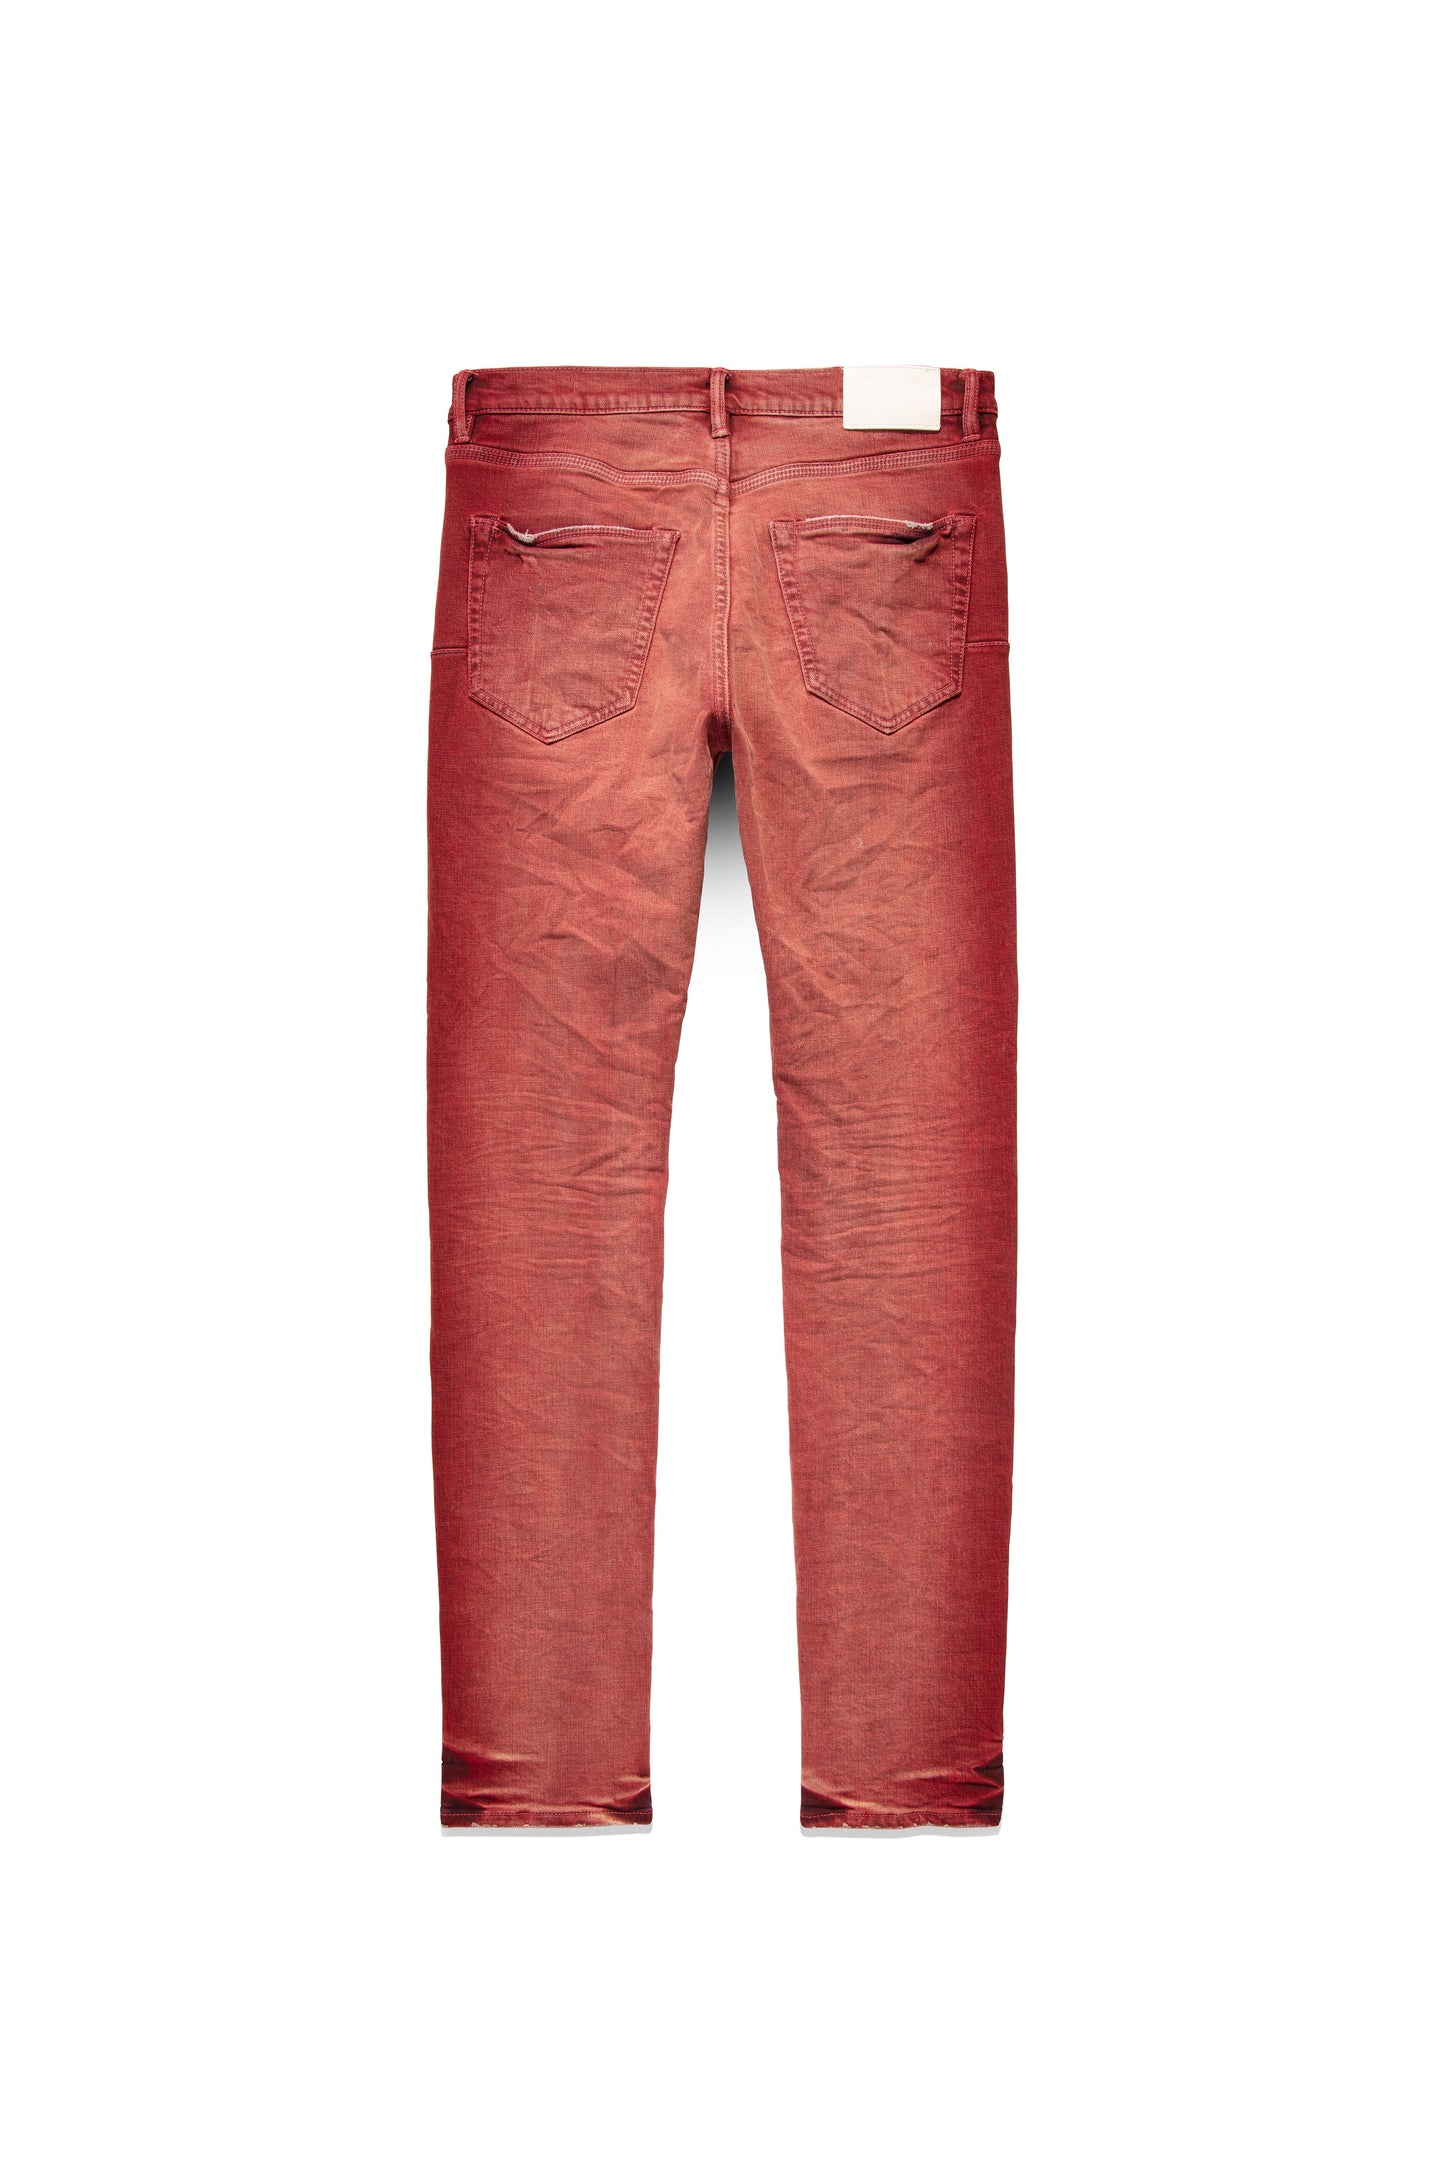 Lessive jeans expert - Lavande & orange